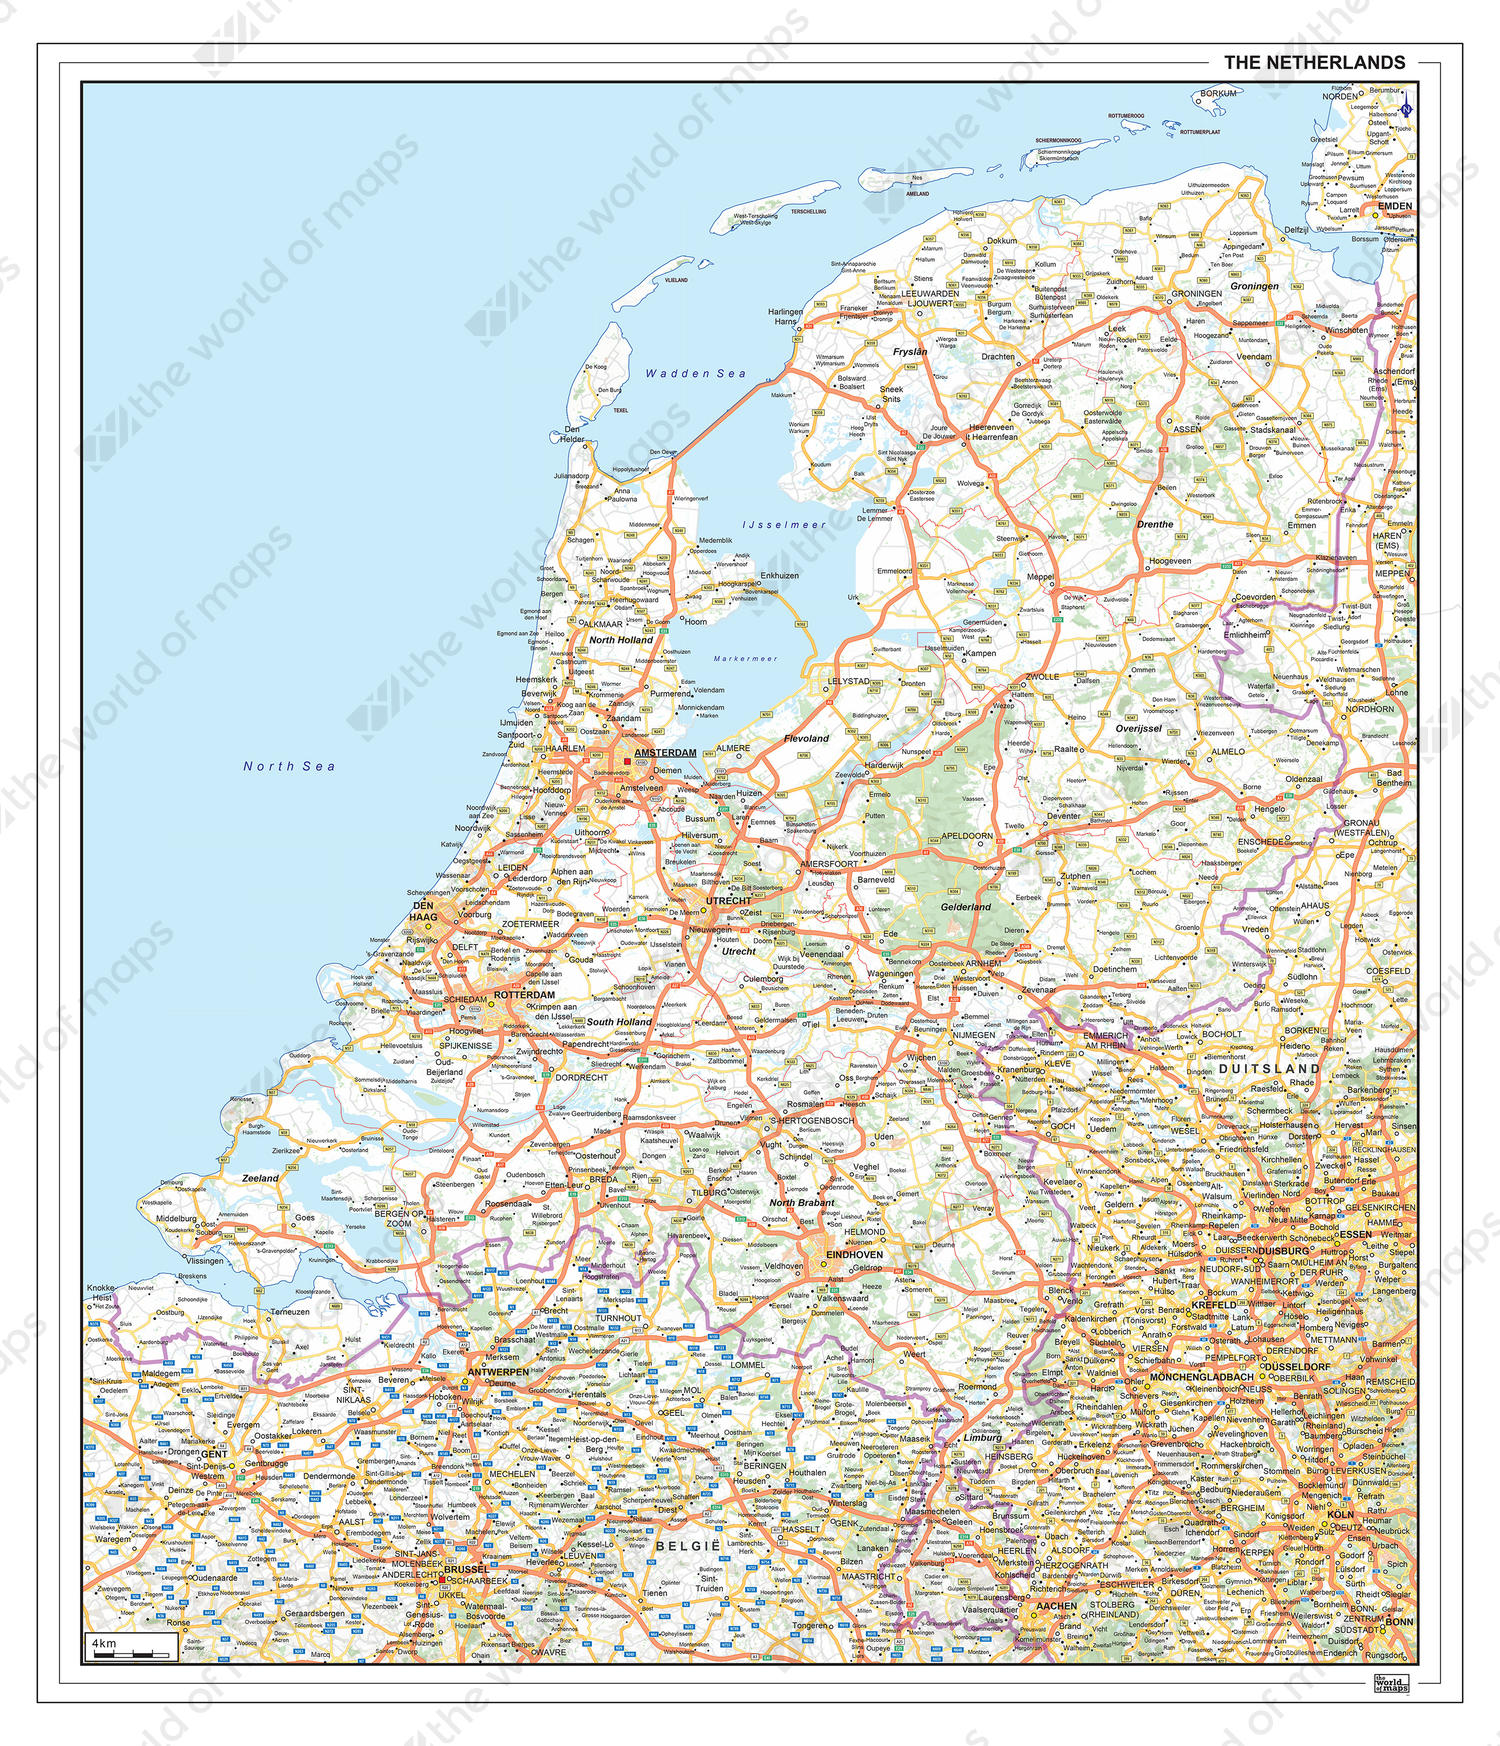 Digital Roadmap The Netherlands 1372 The World Of Maps Com